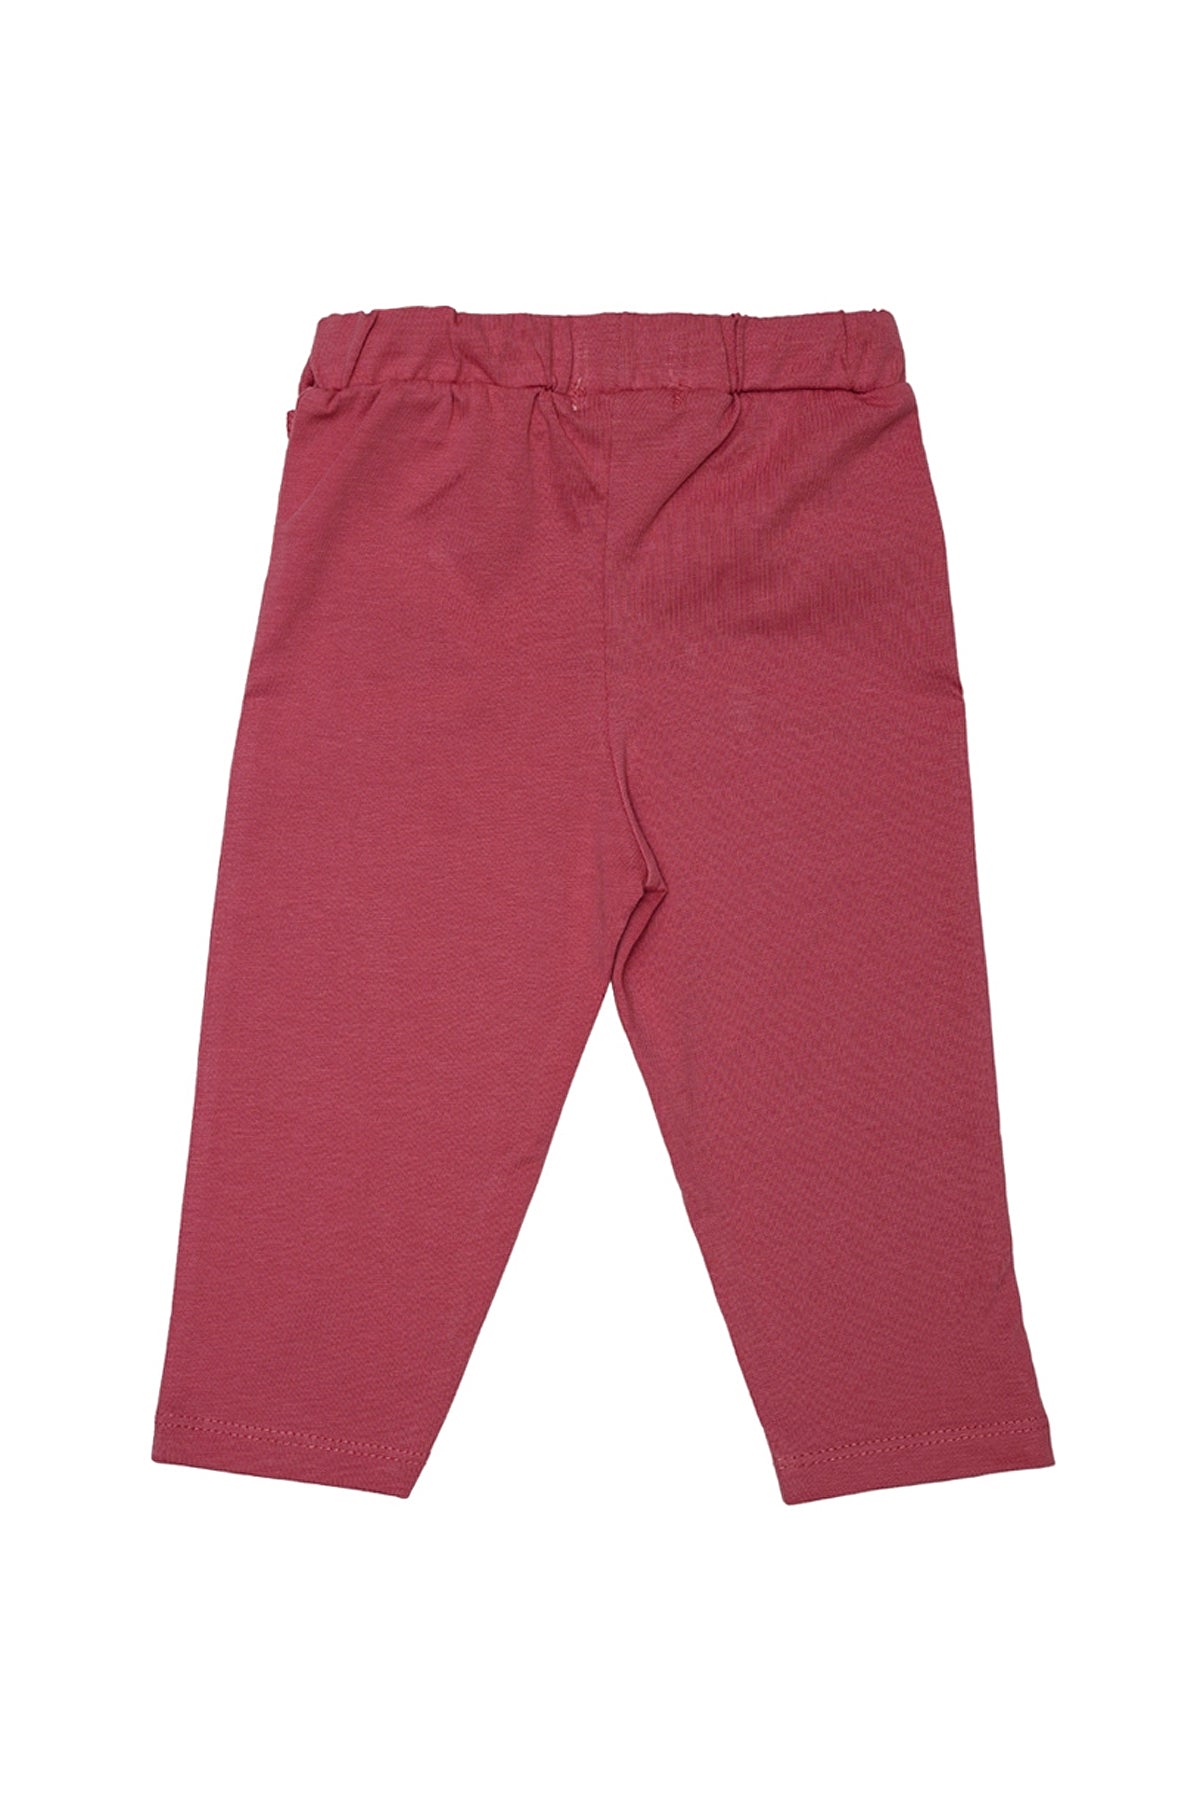 Pajama (Pack Of 2) (IGPP-074)